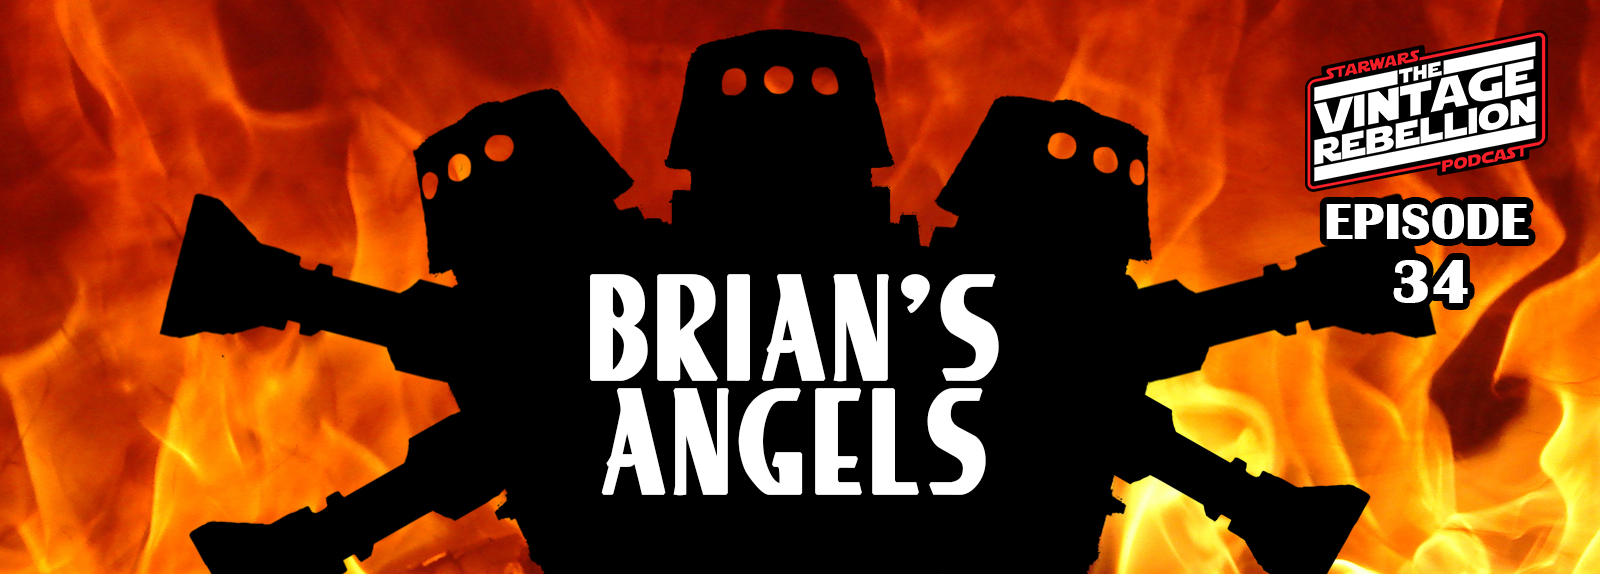 Episode 34 : Brian's Angels